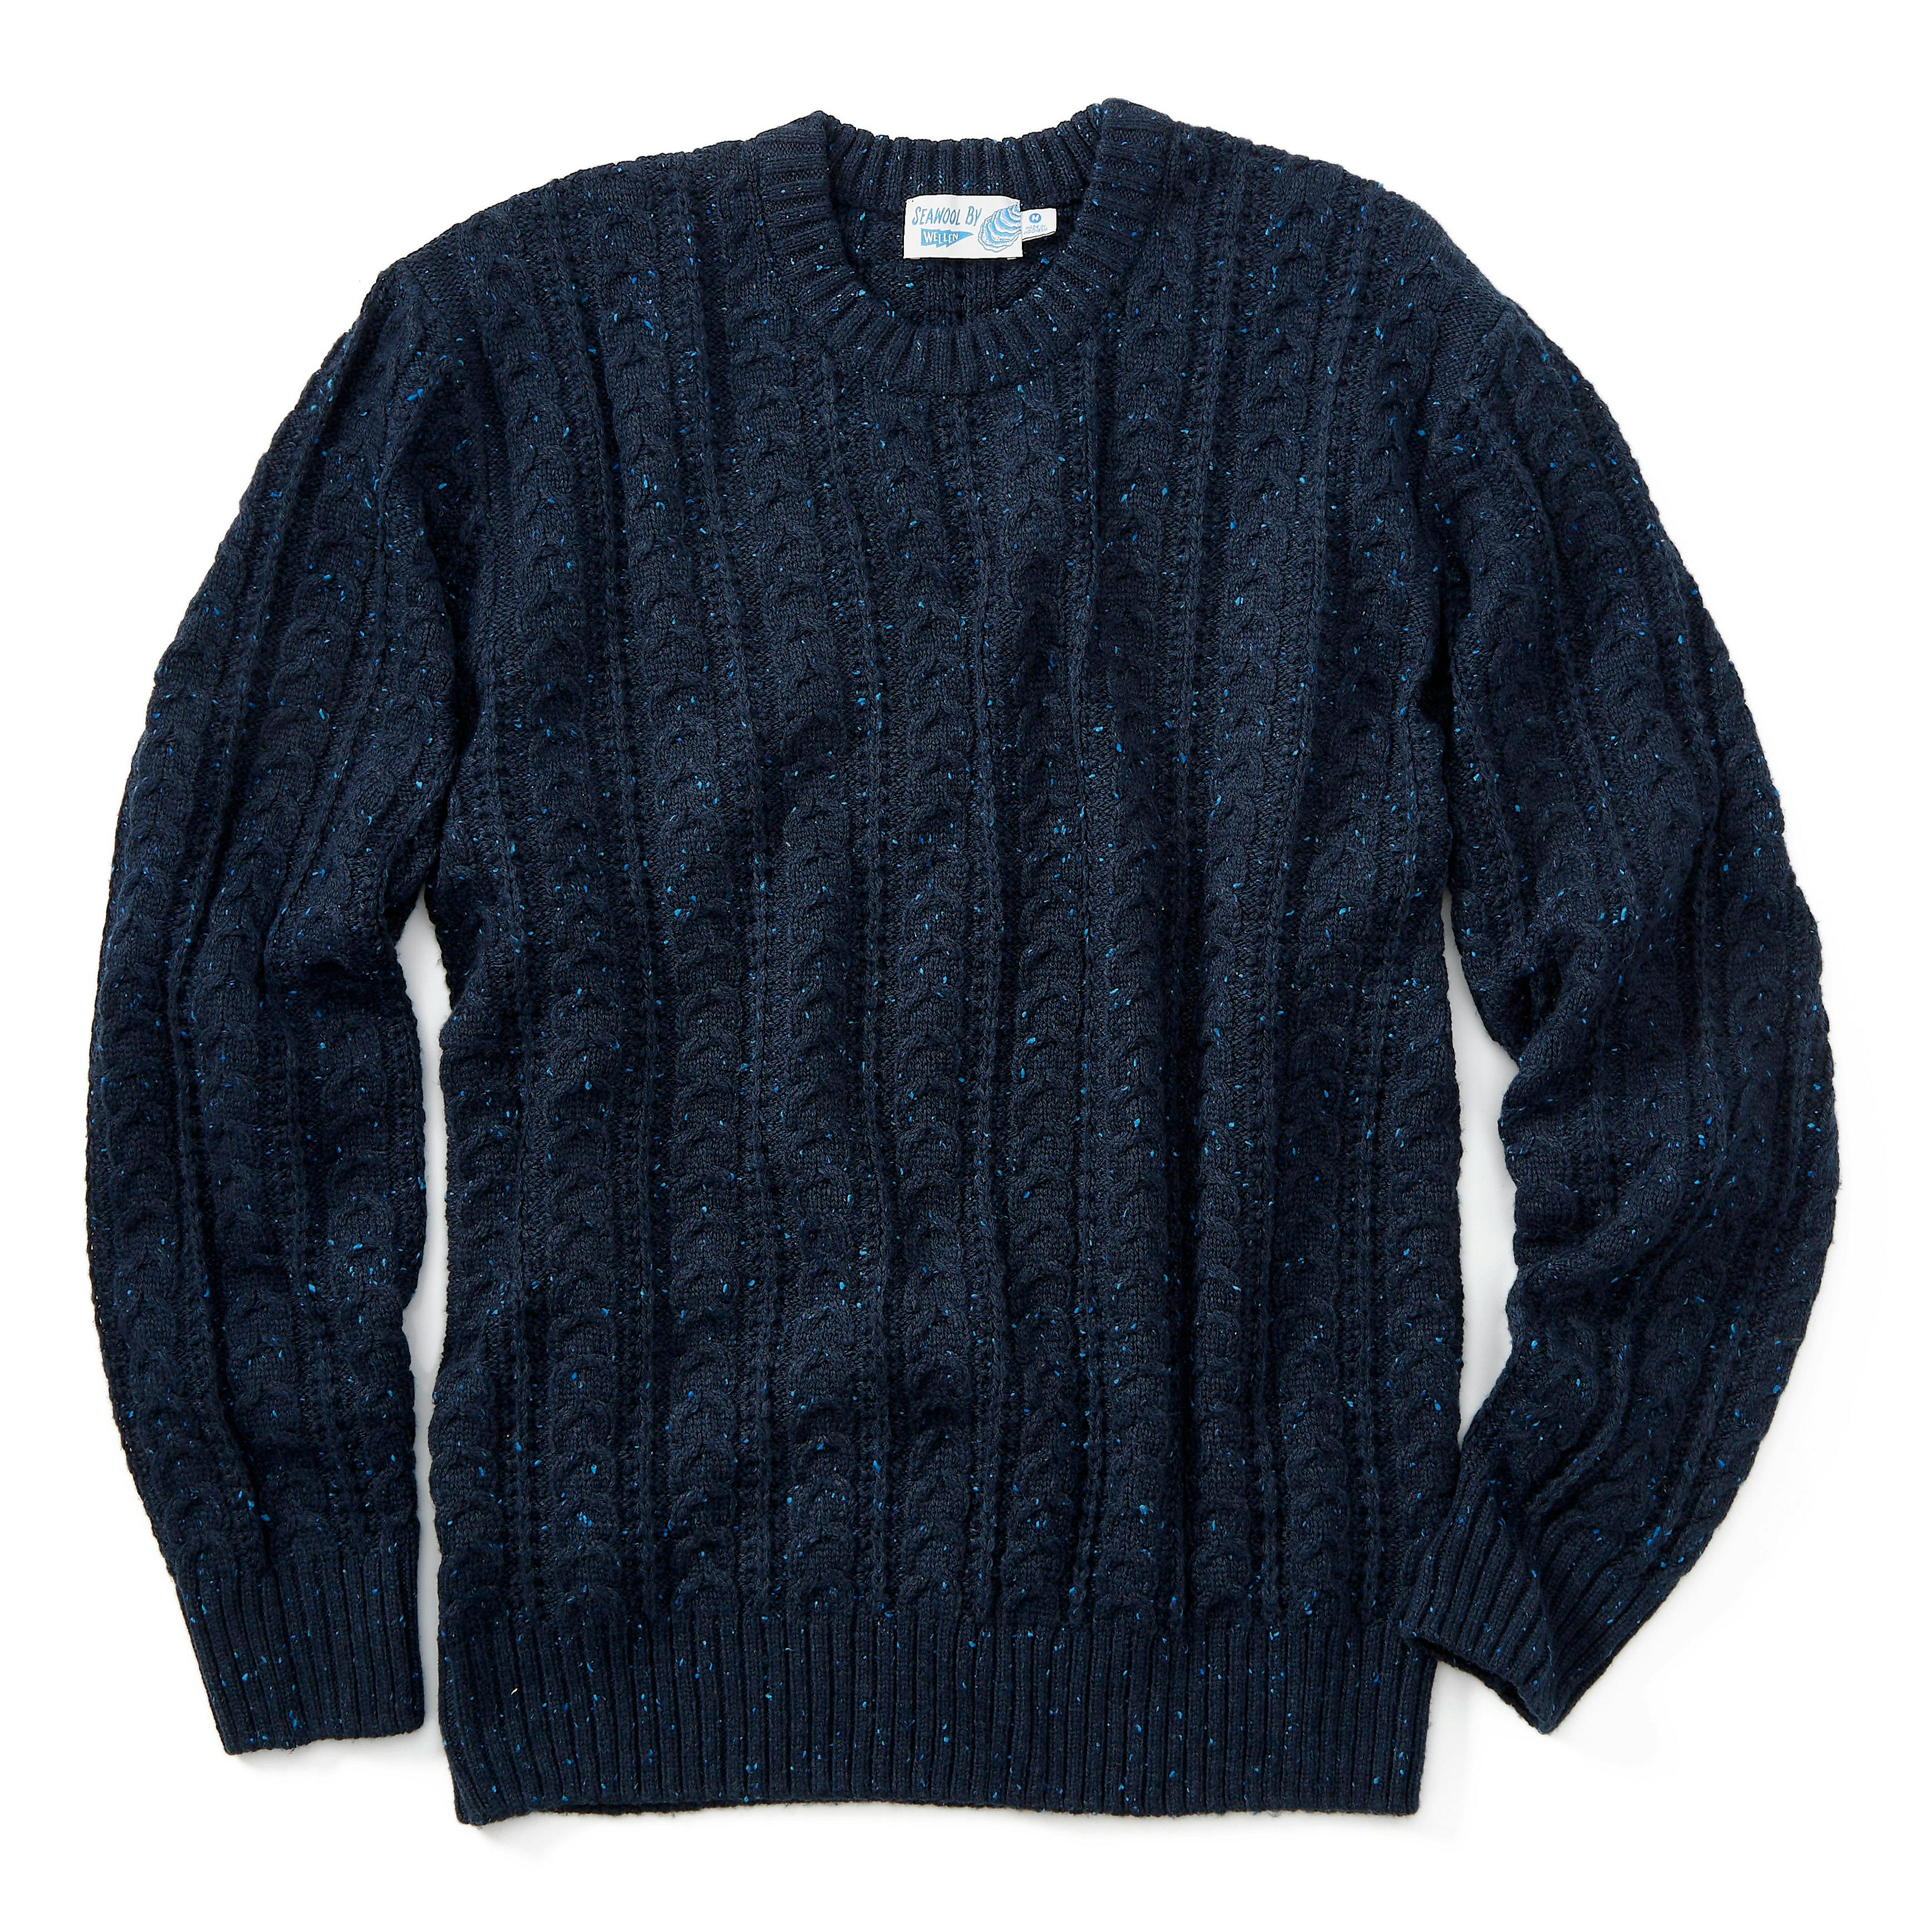 Wellen Seawool Fisherman Crewneck Sweater - Navy, Fisherman Sweaters